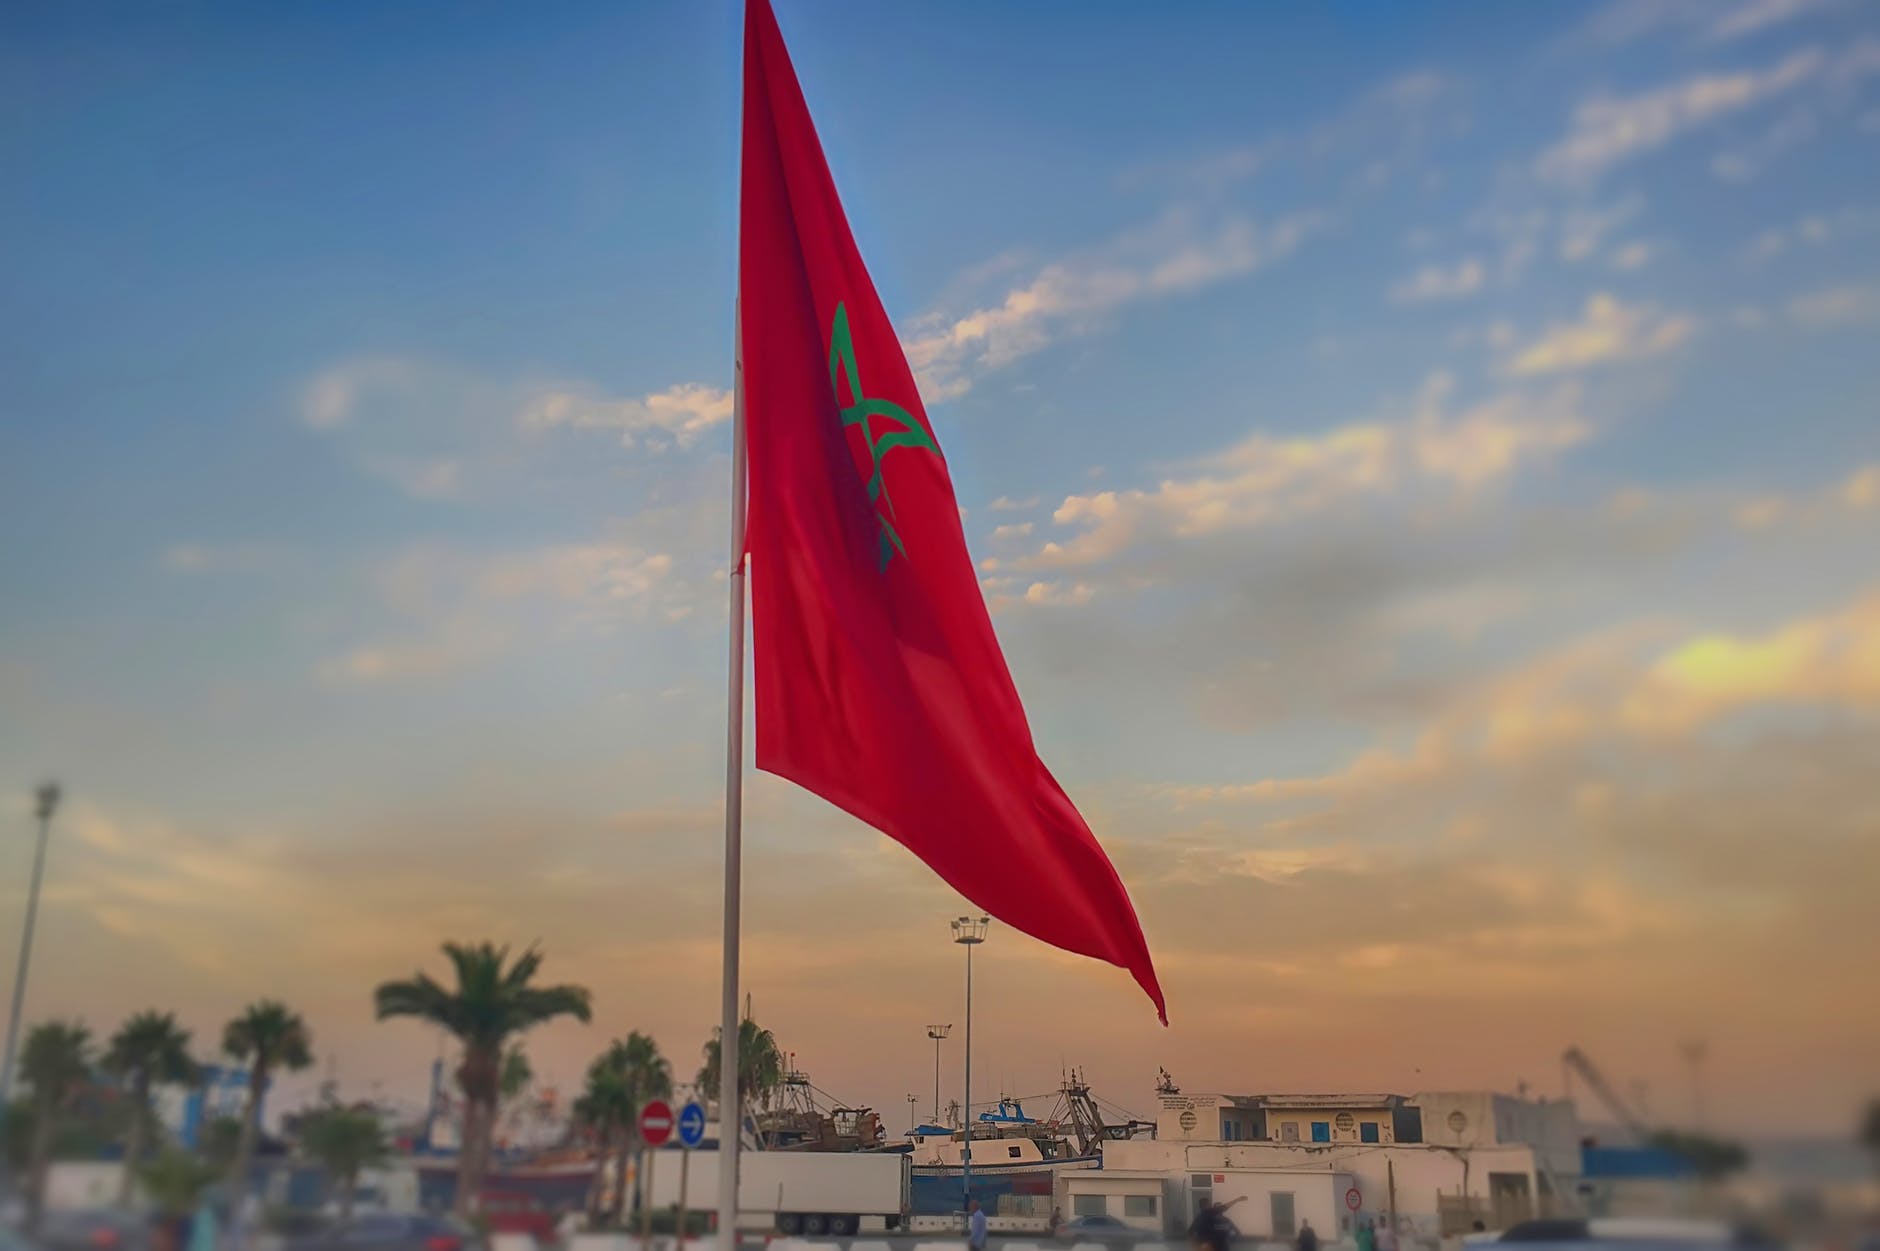 marocco - clima - maroc - sahara - اتفاق مصري - المغرب - couverture - marocco unesco -maroc - تعميم